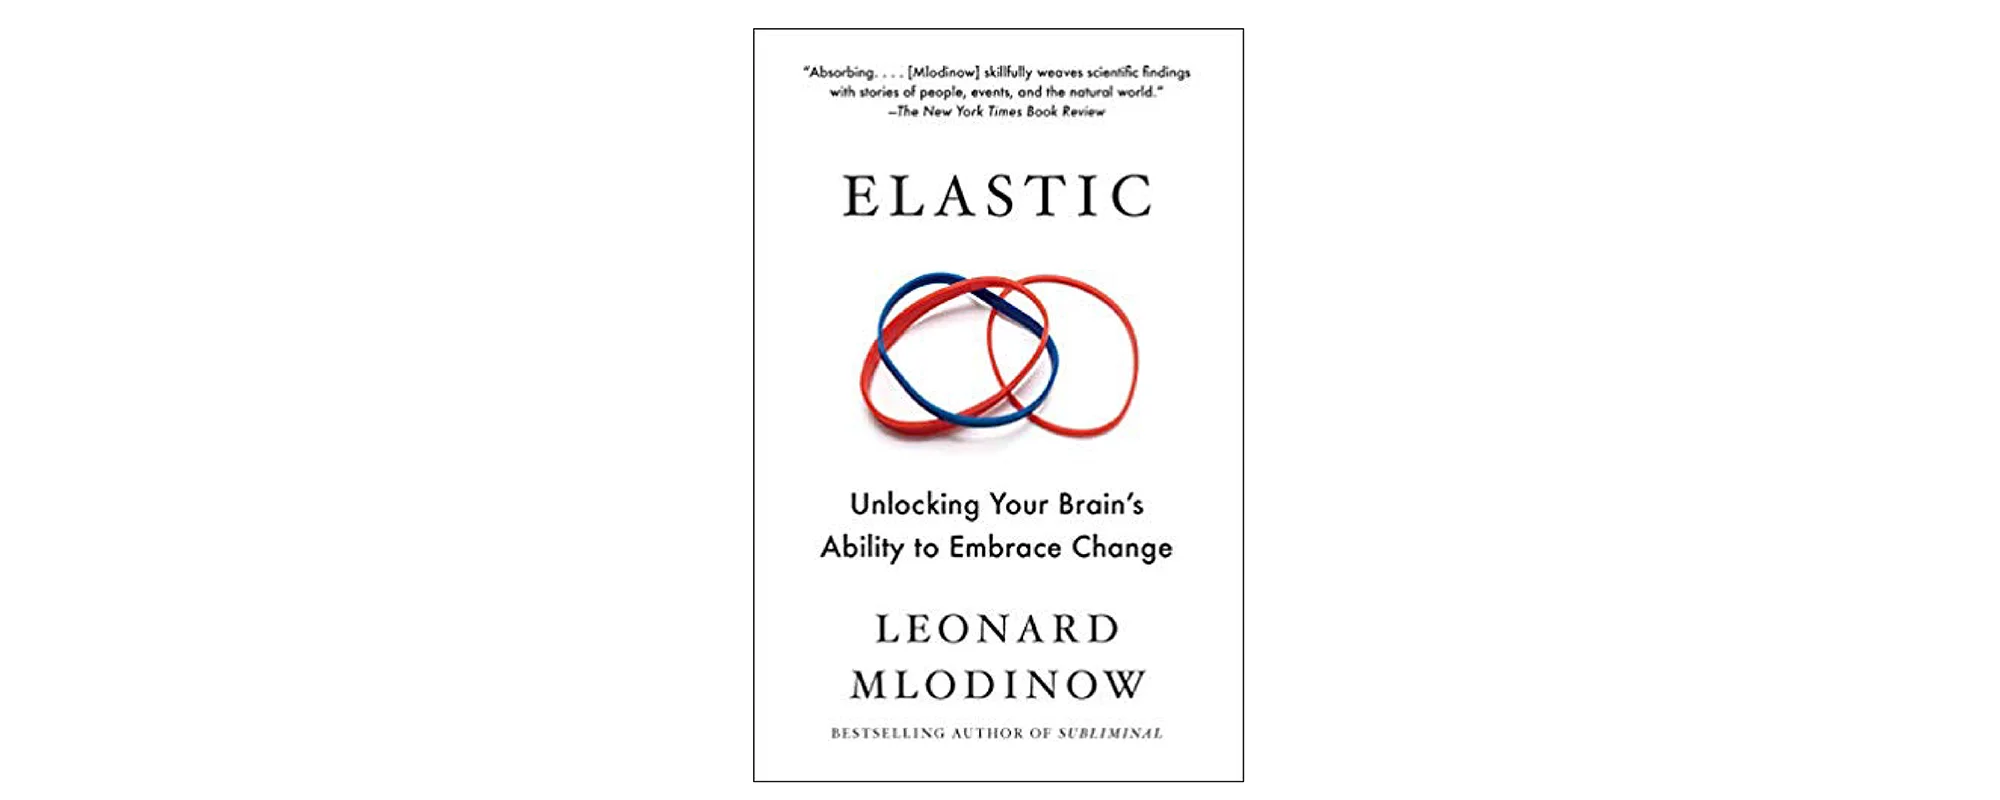 Elastic: Unlocking Your Brain’s Ability to Embrace Change by Leonard Mlodinow